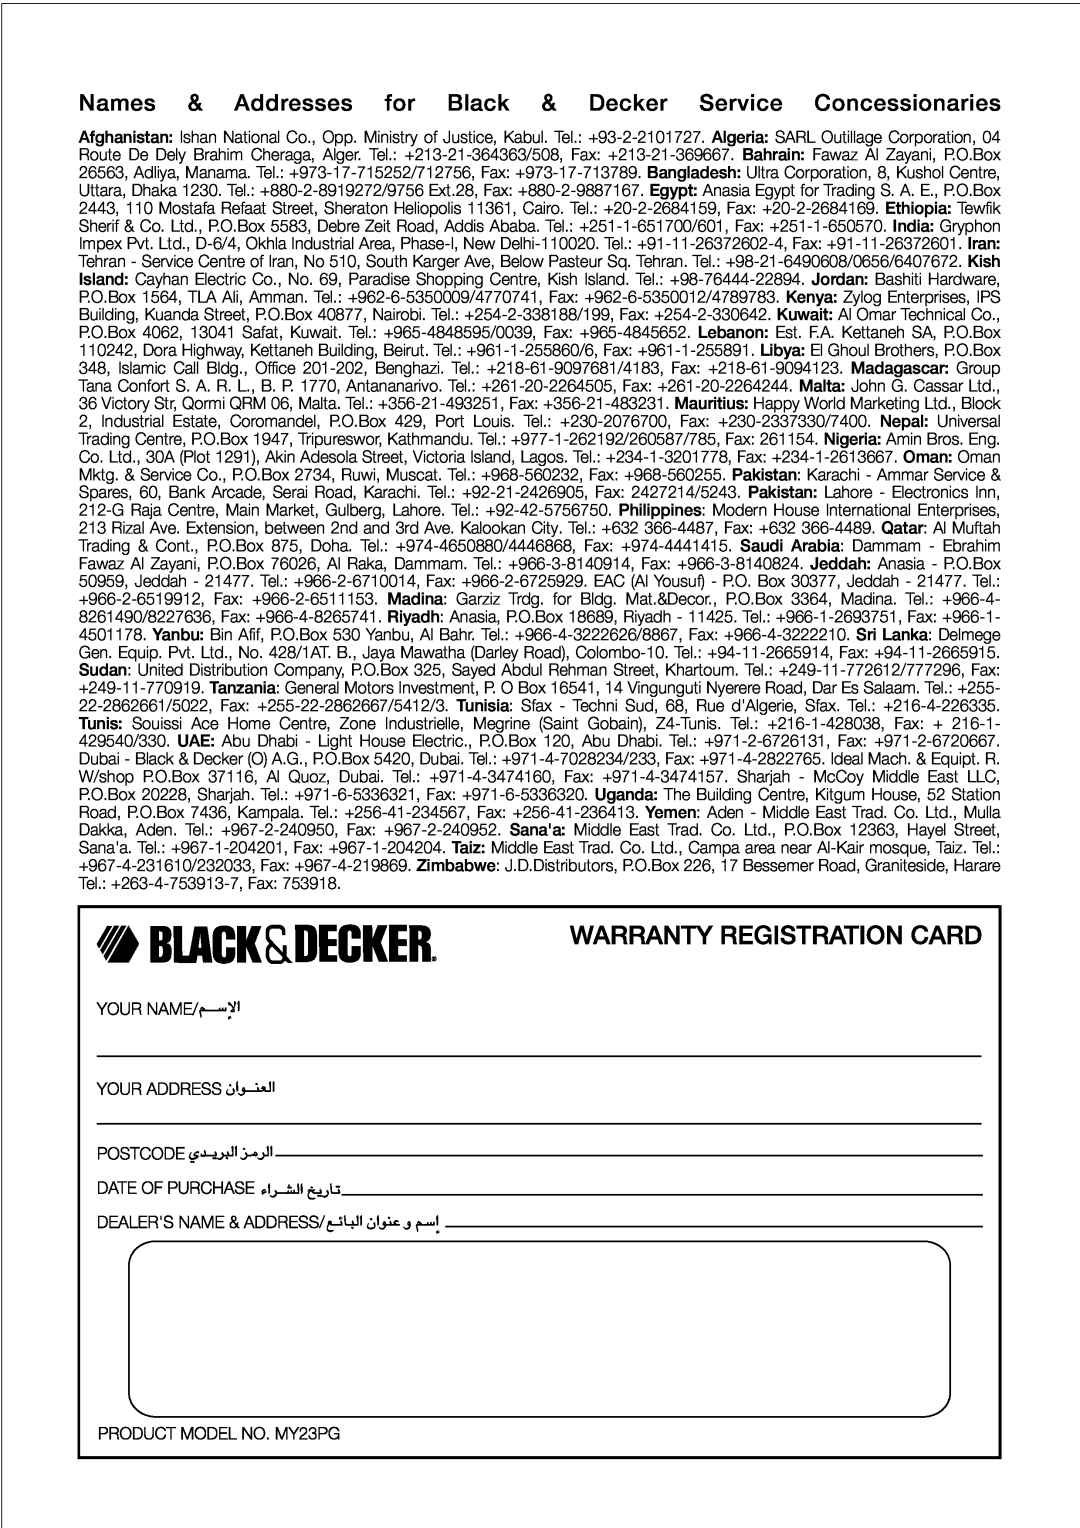 Black & Decker MY23PG manual Tel. +263-4-753913-7,Fax 